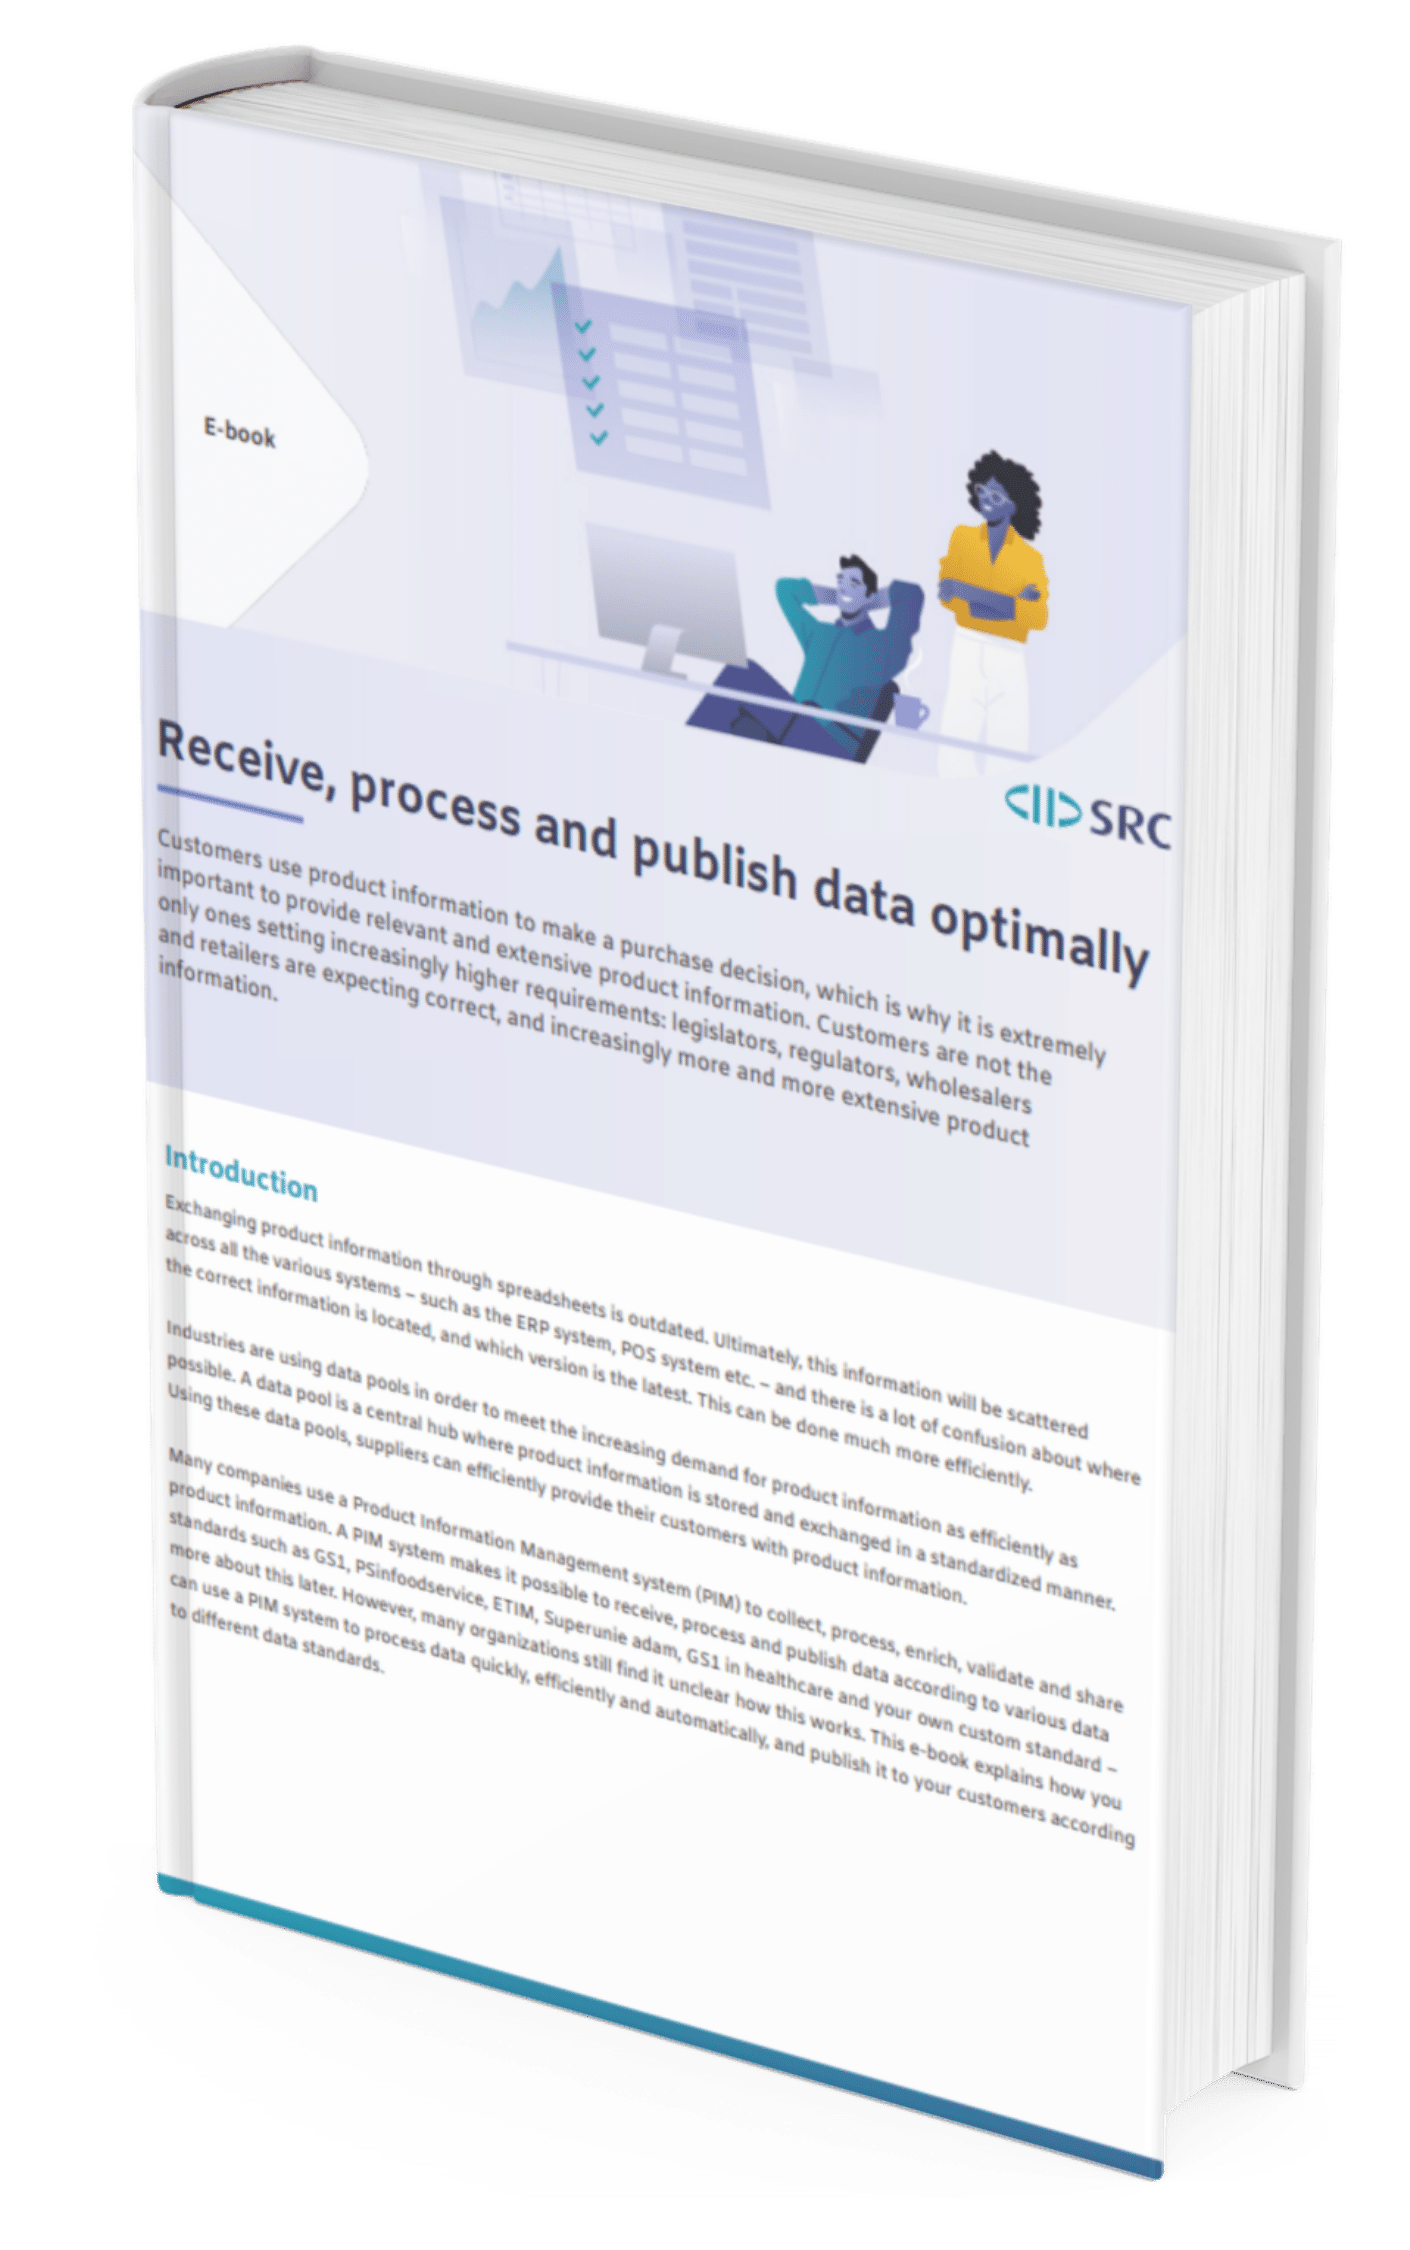 E-book: Receive, process and publish data optimally